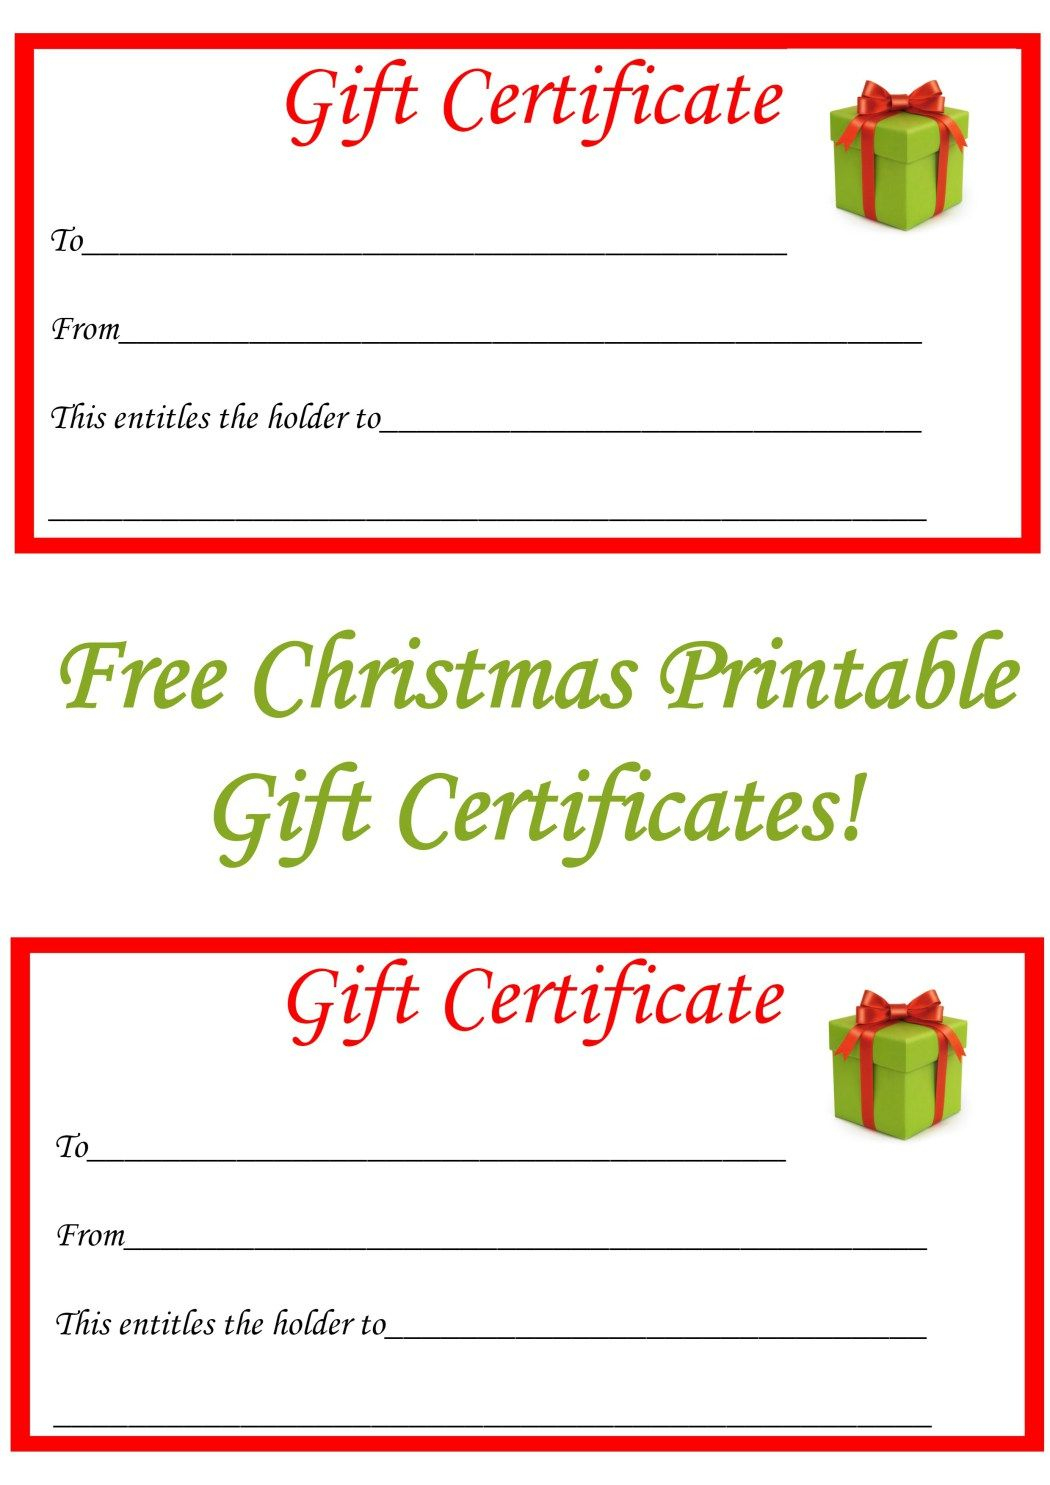 Free Christmas Printable Gift Certificates | Gift Ideas | Pinterest - Free Printable Gift Coupons